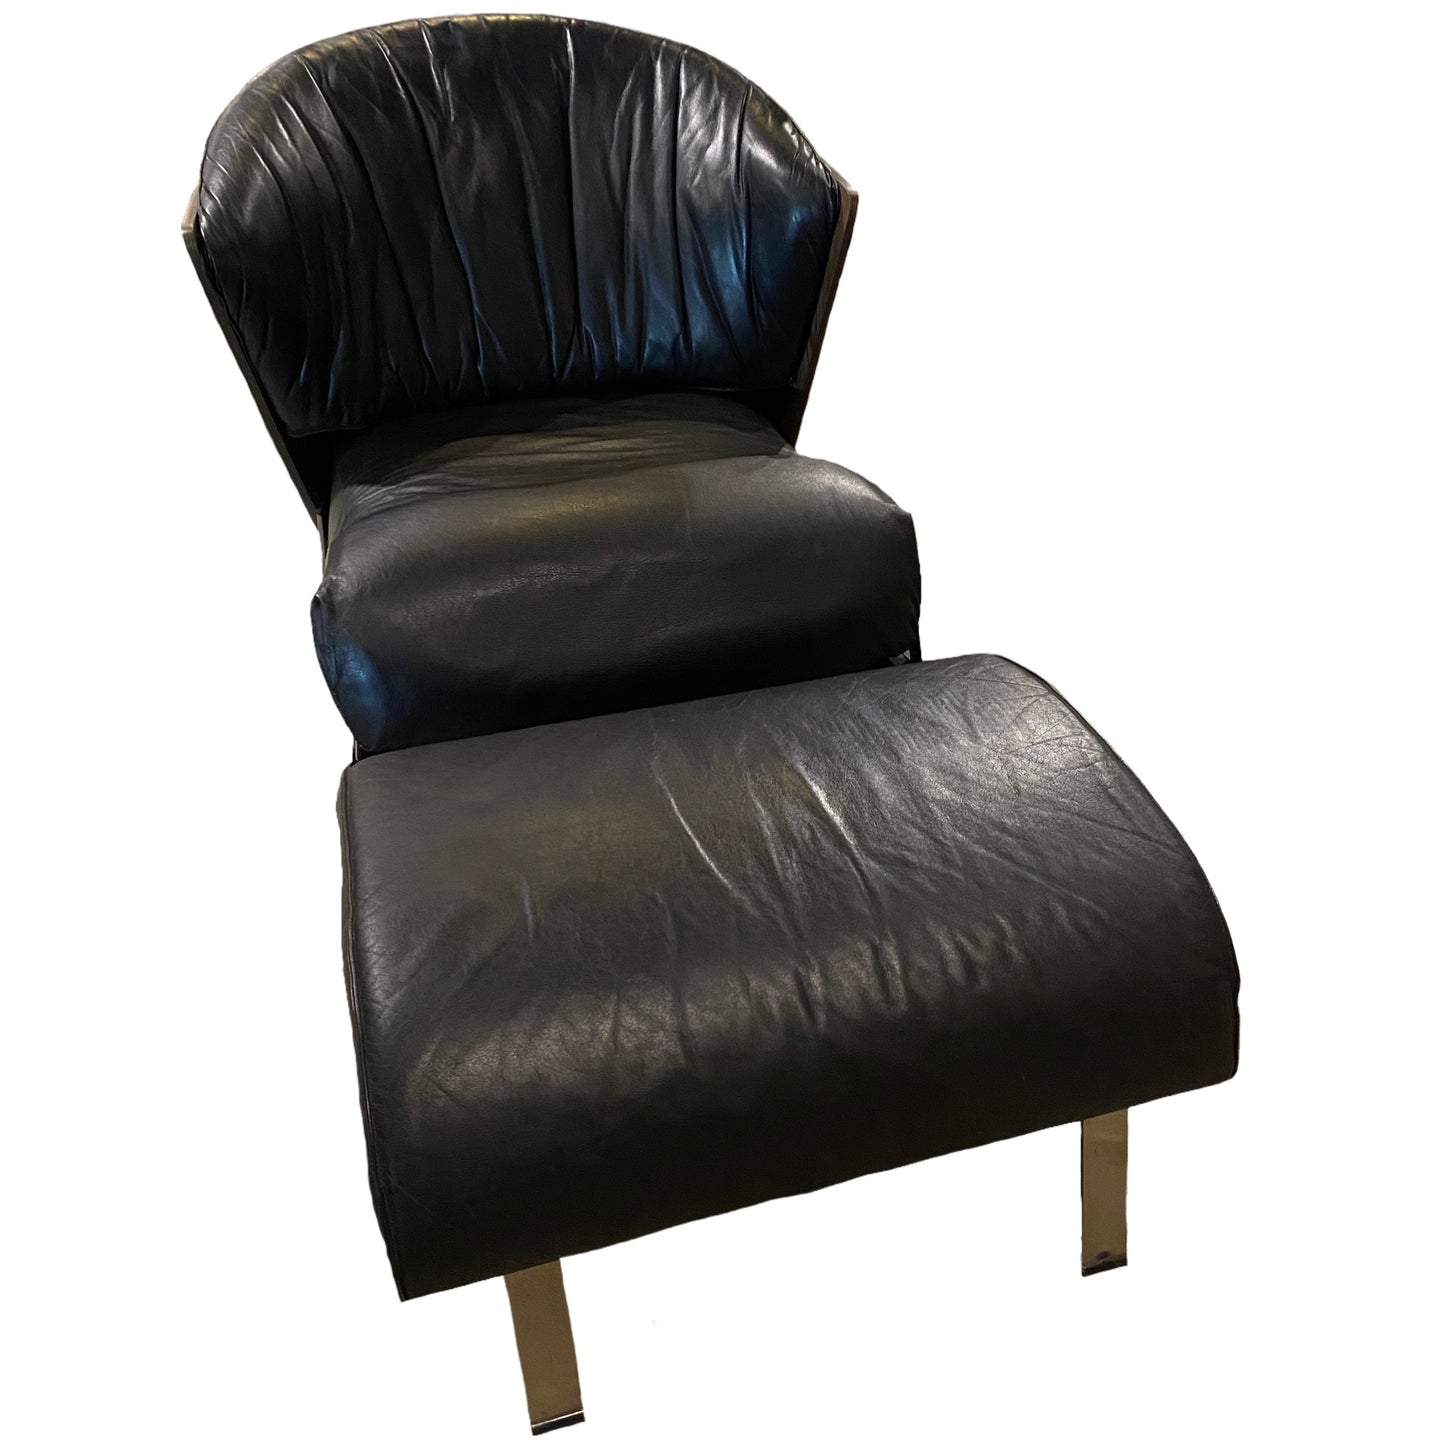 Franco Raggi Chair & Ottoman